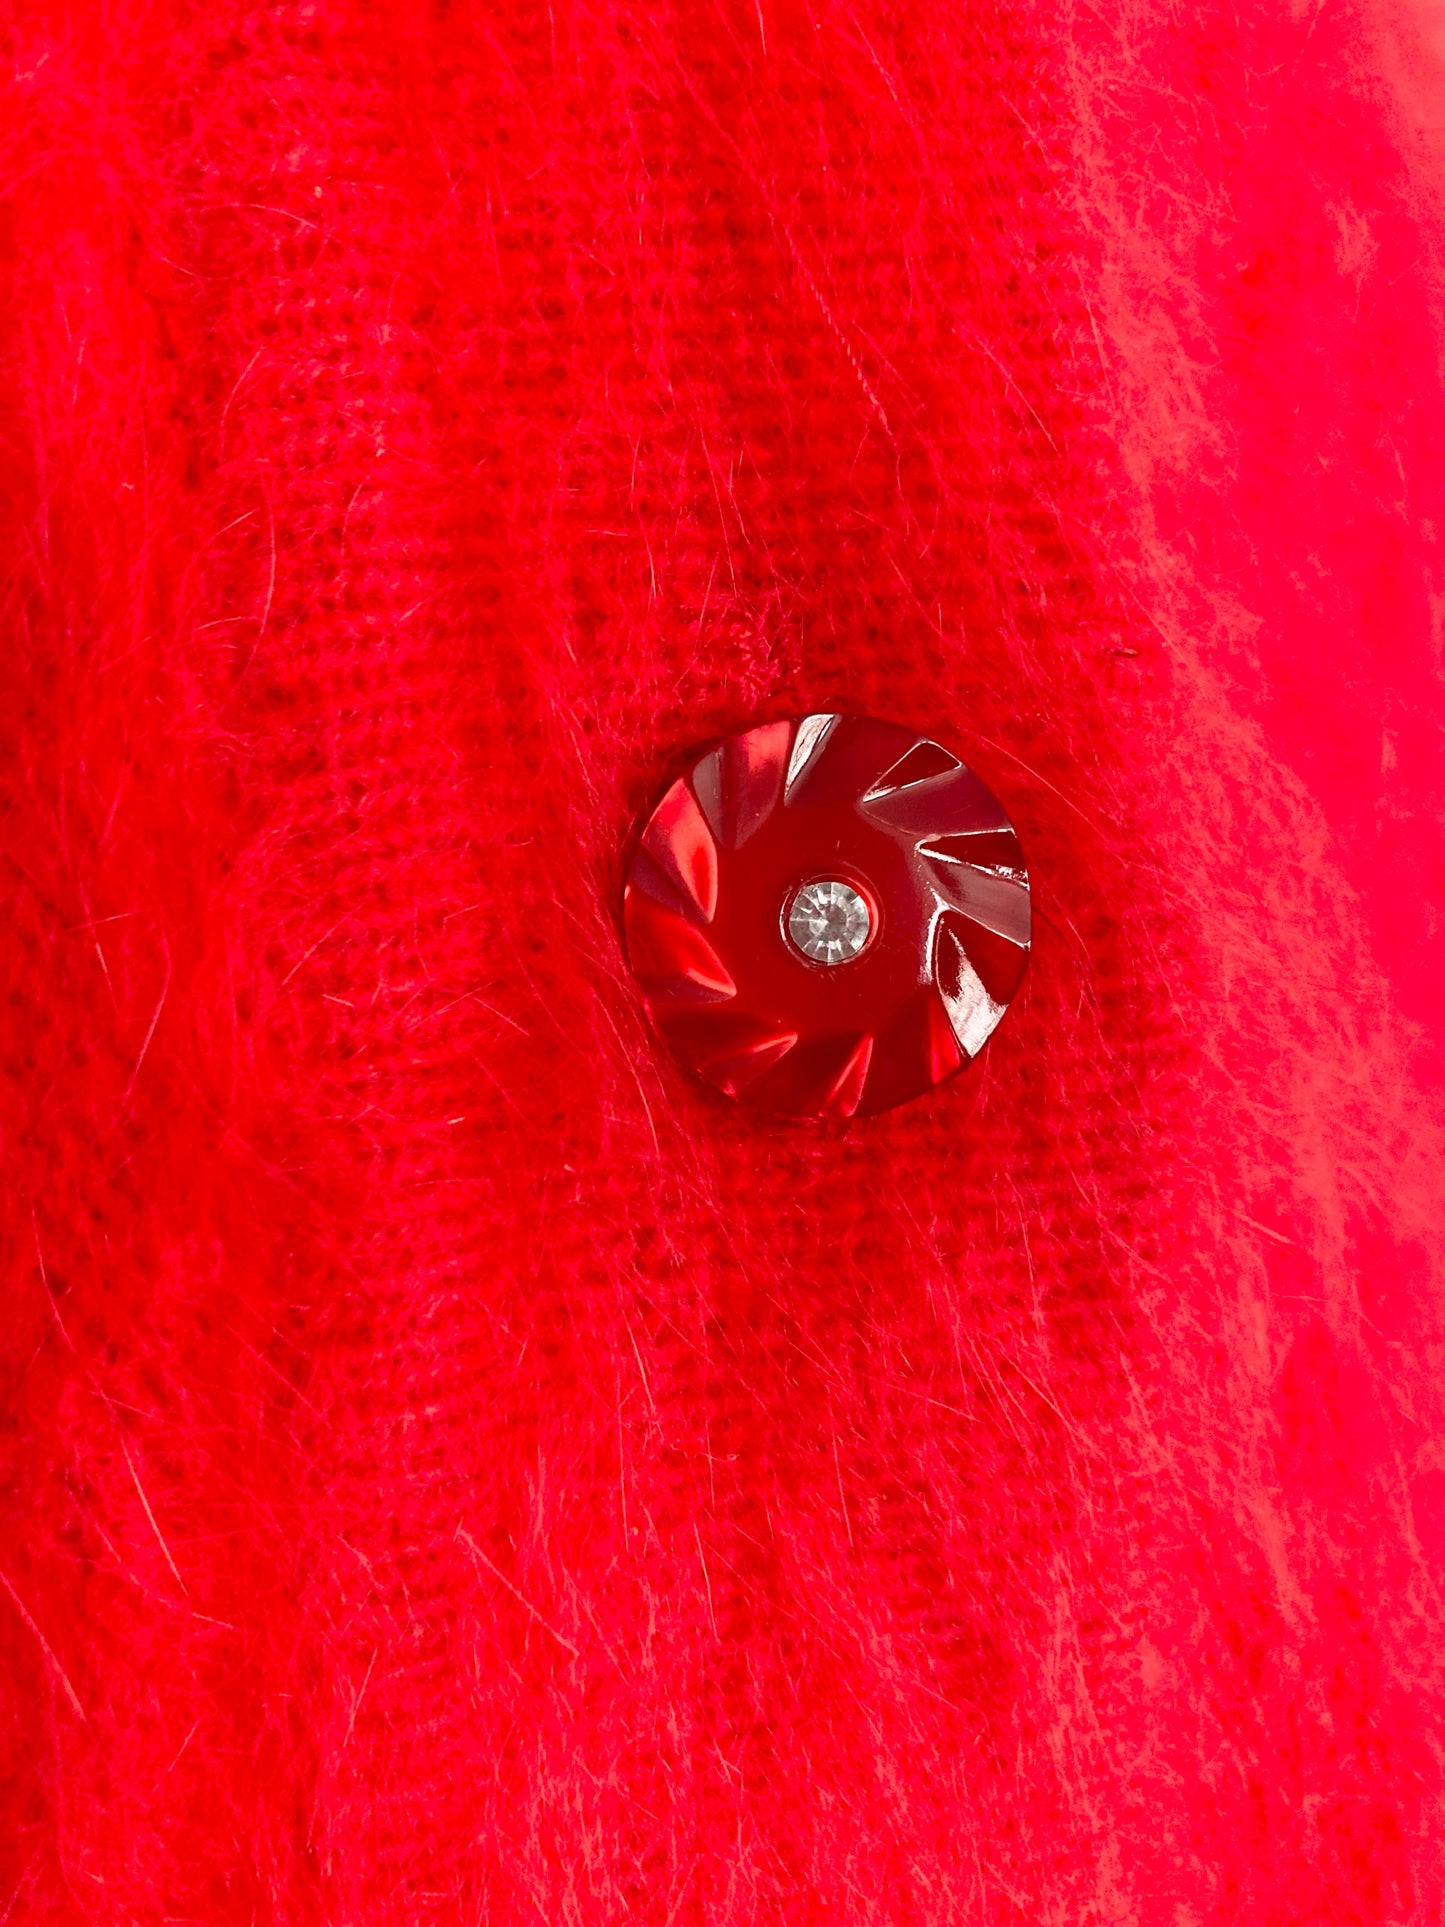 80s Red Angora Oversized Cardigan, Size M